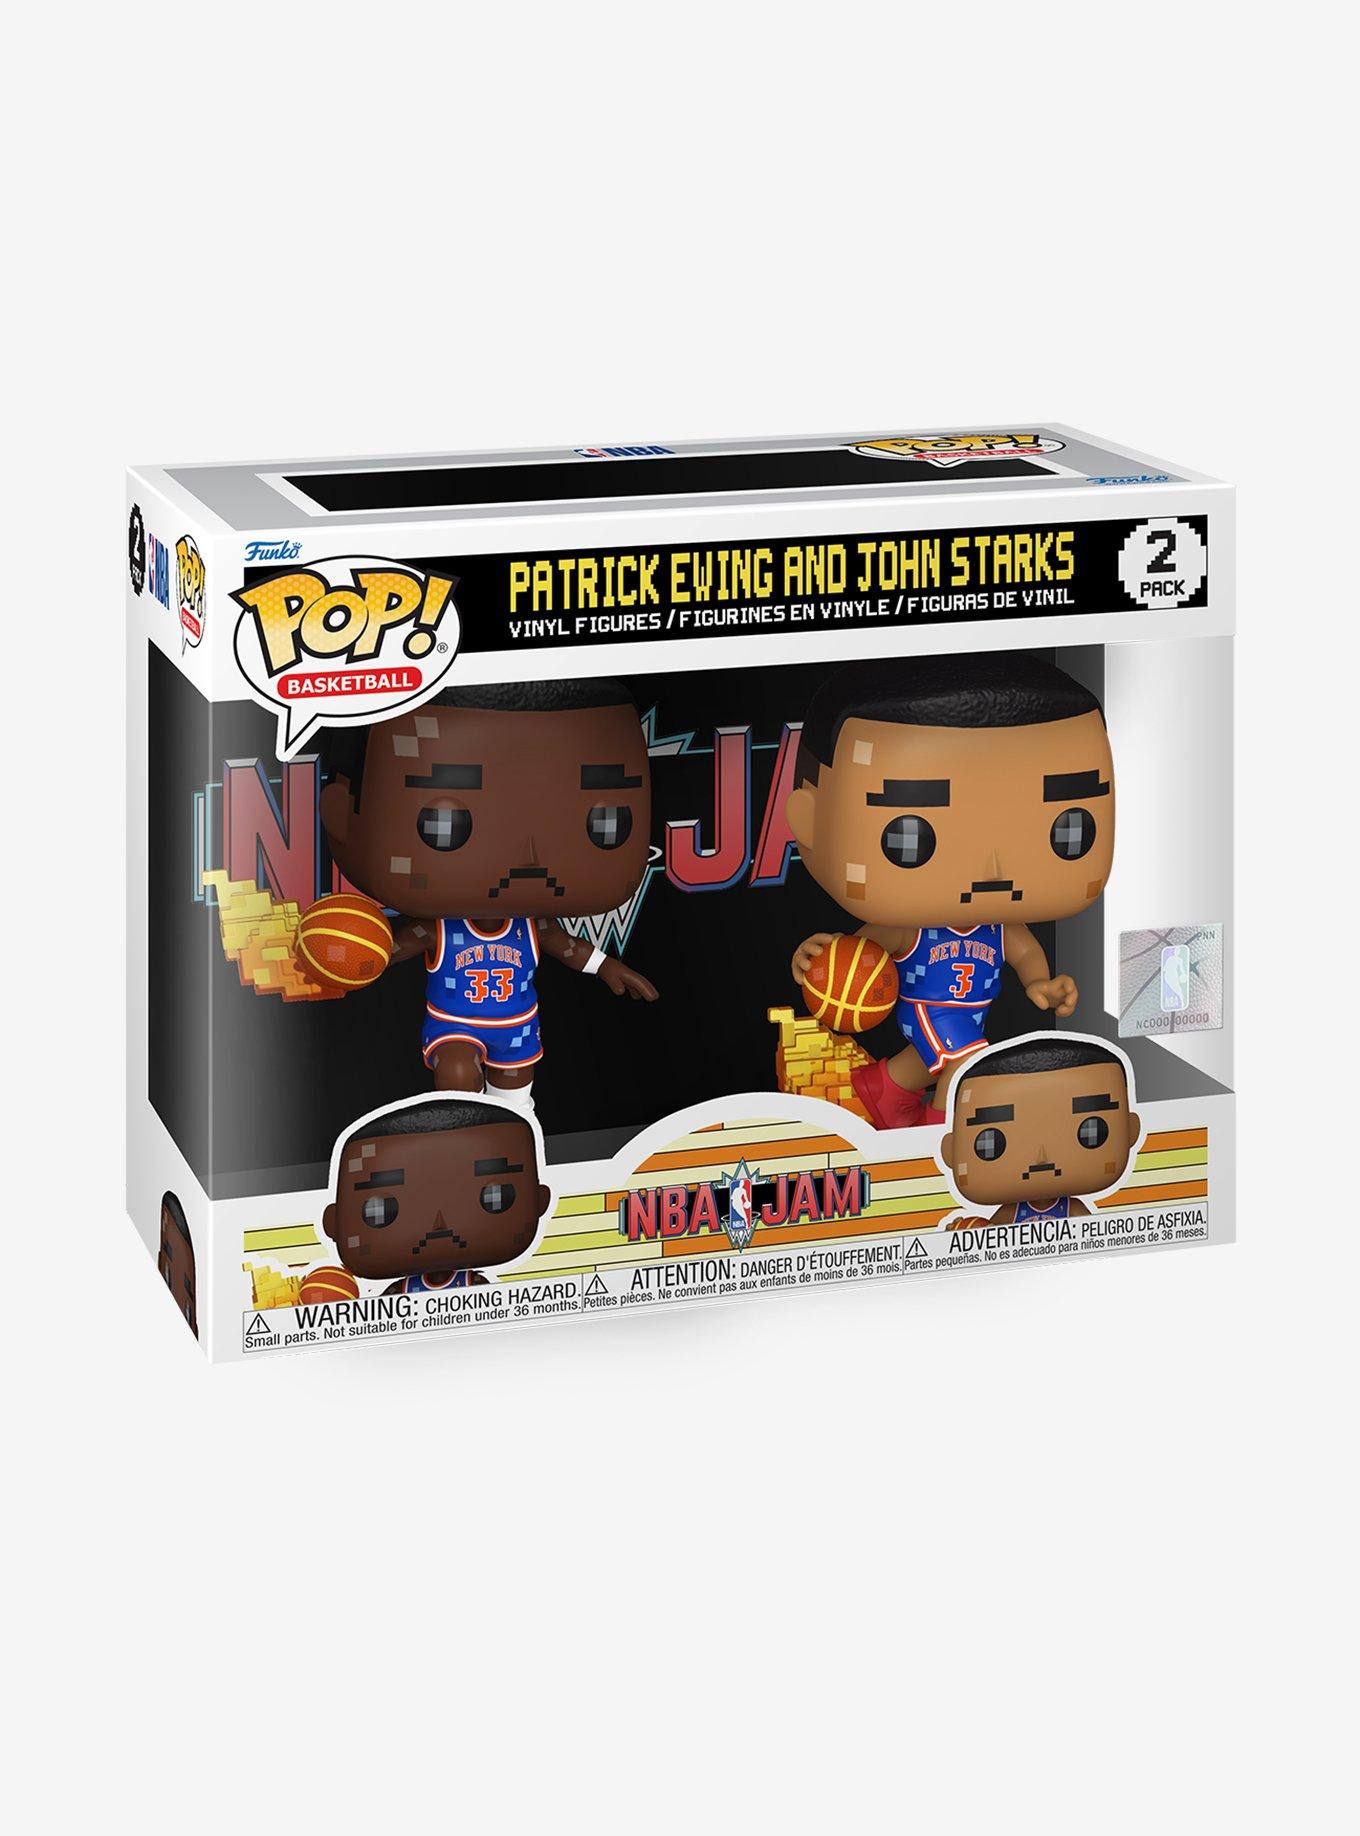 Funko Pop! Basketball NBA Jam Patrick Ewing and John Starks Vinyl Figure Set, , hi-res